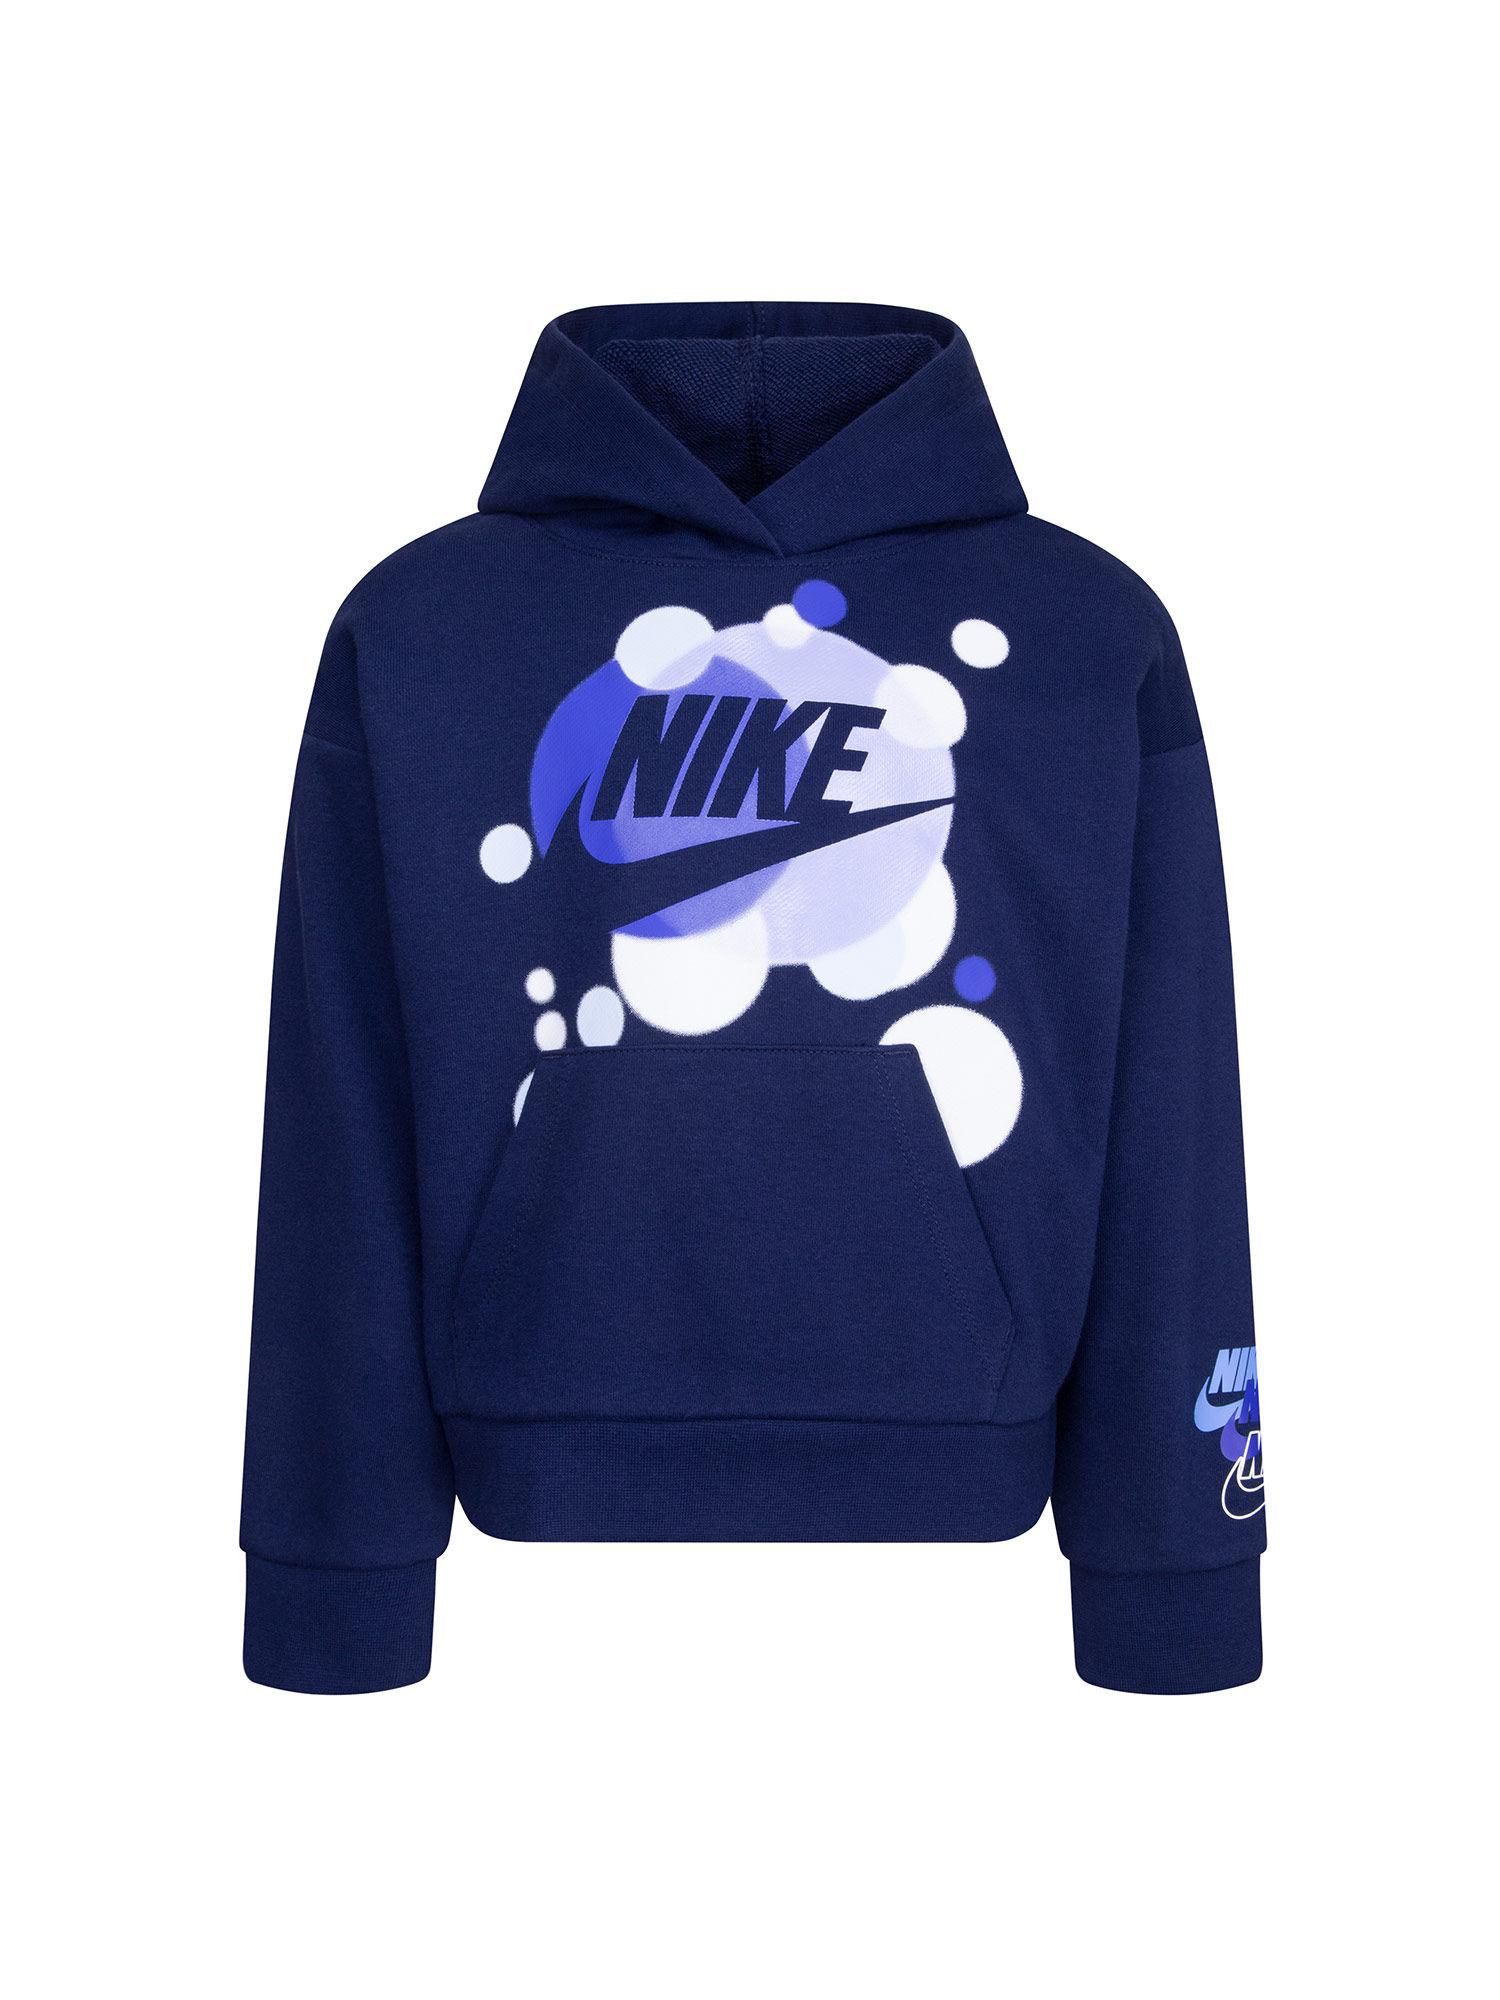 girls-navy-blue-graphic-hoodie